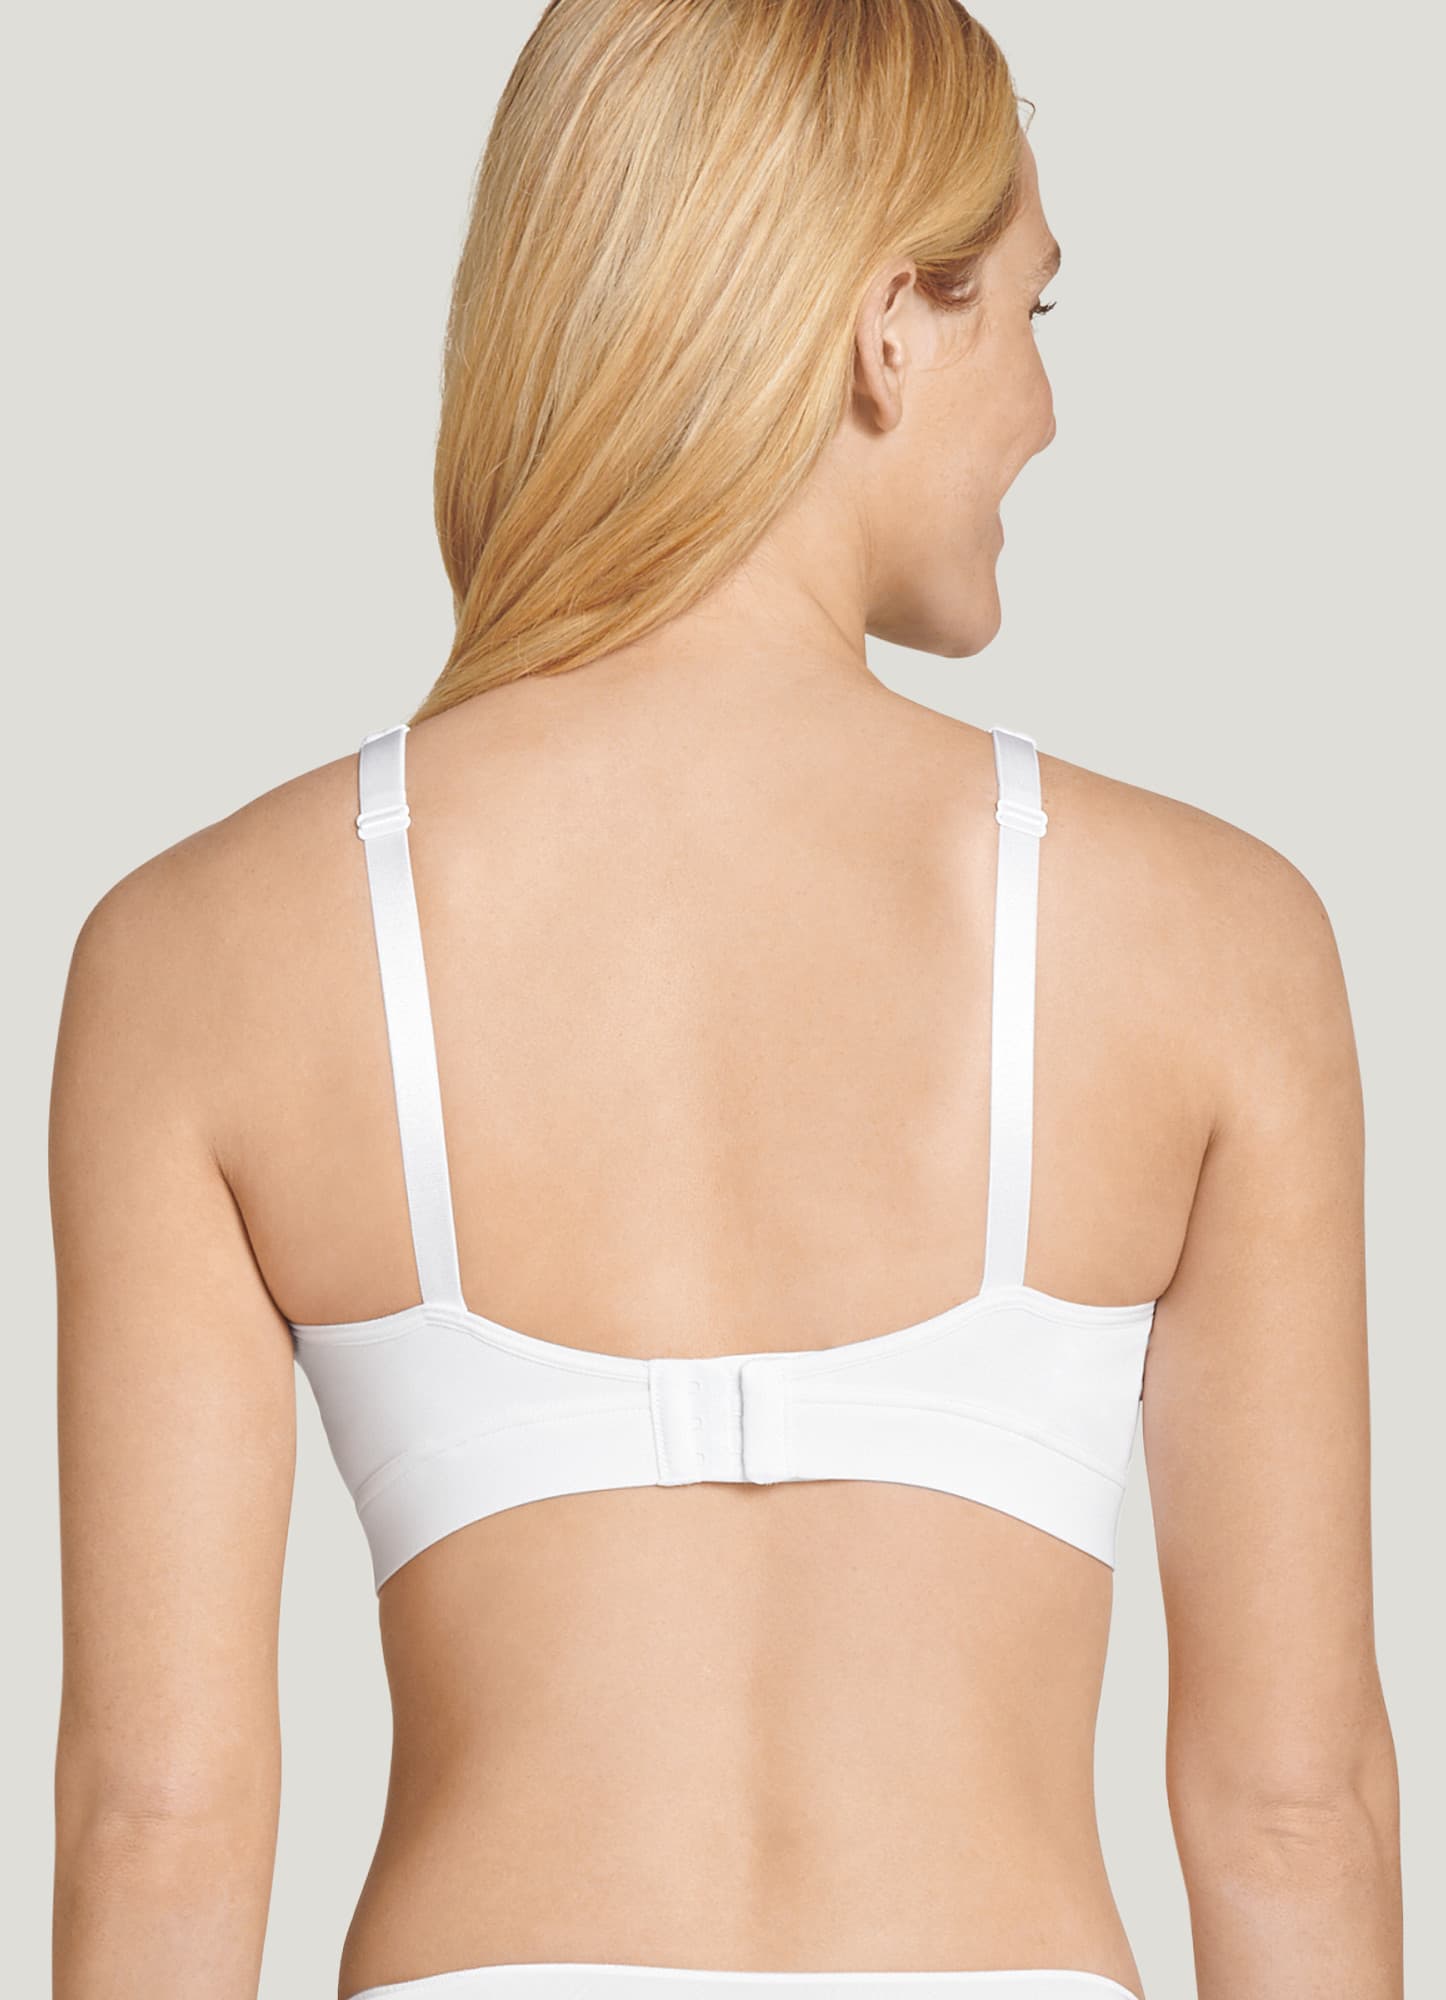 Buy Jockey Light Skin Low neckline front opening bra : Style Number # 1815  online